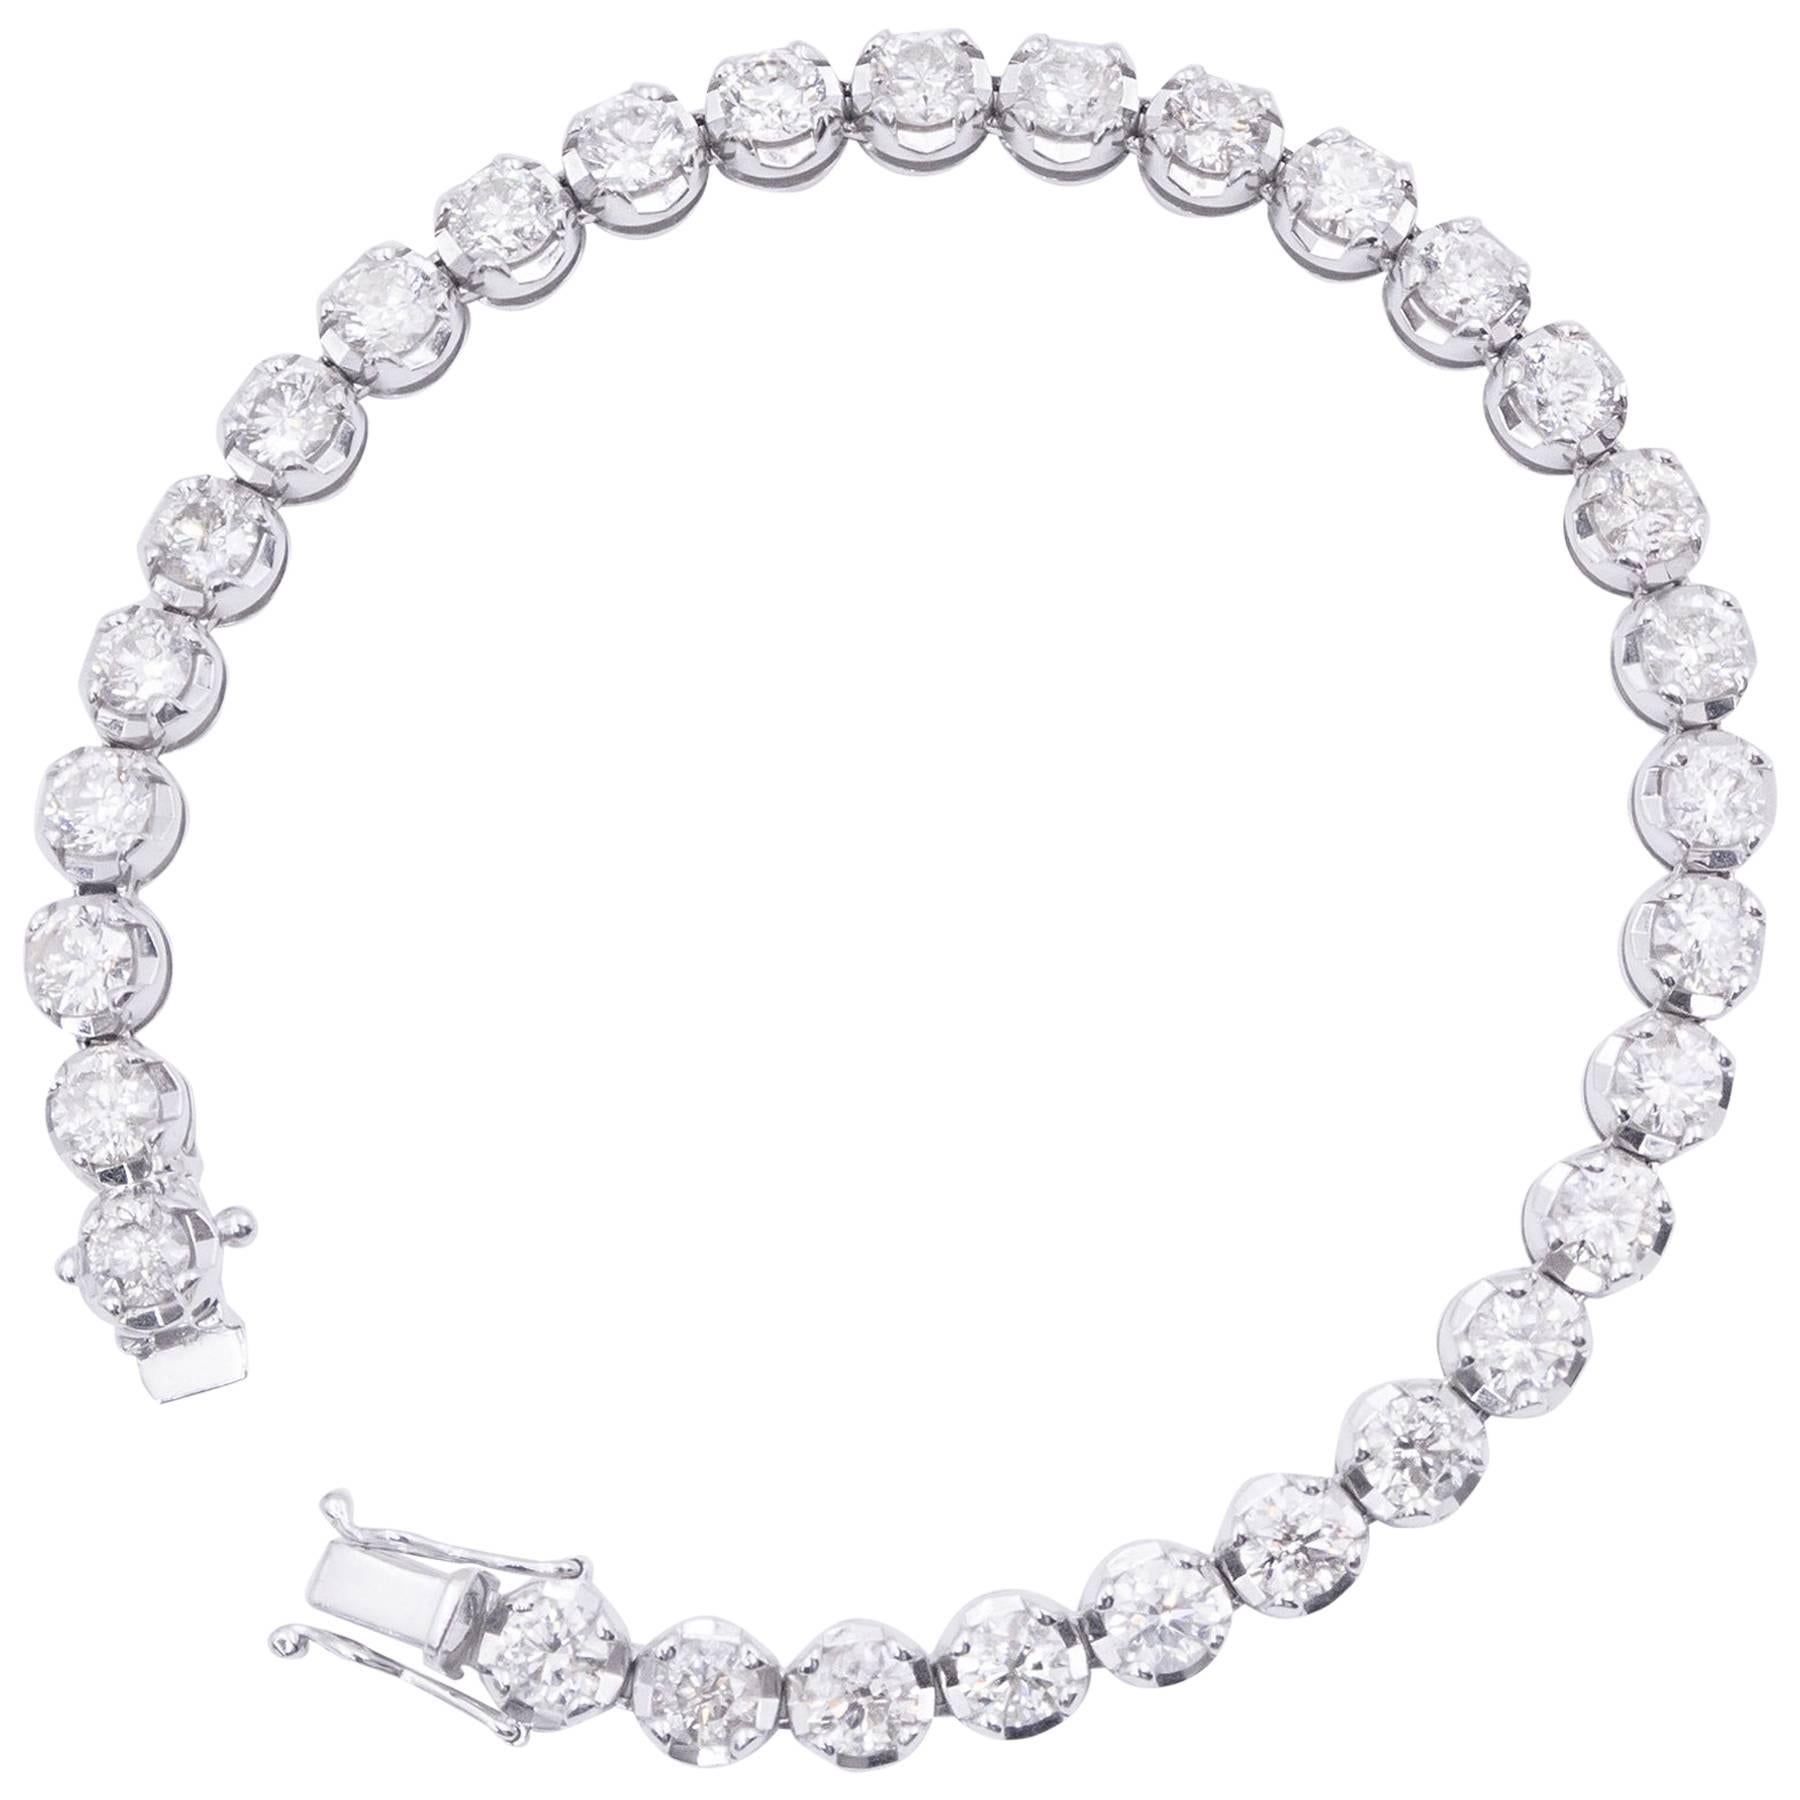 Fabulous 10.26 Carat Diamond Tennis Bracelet Set in 18 Karat White Gold For Sale